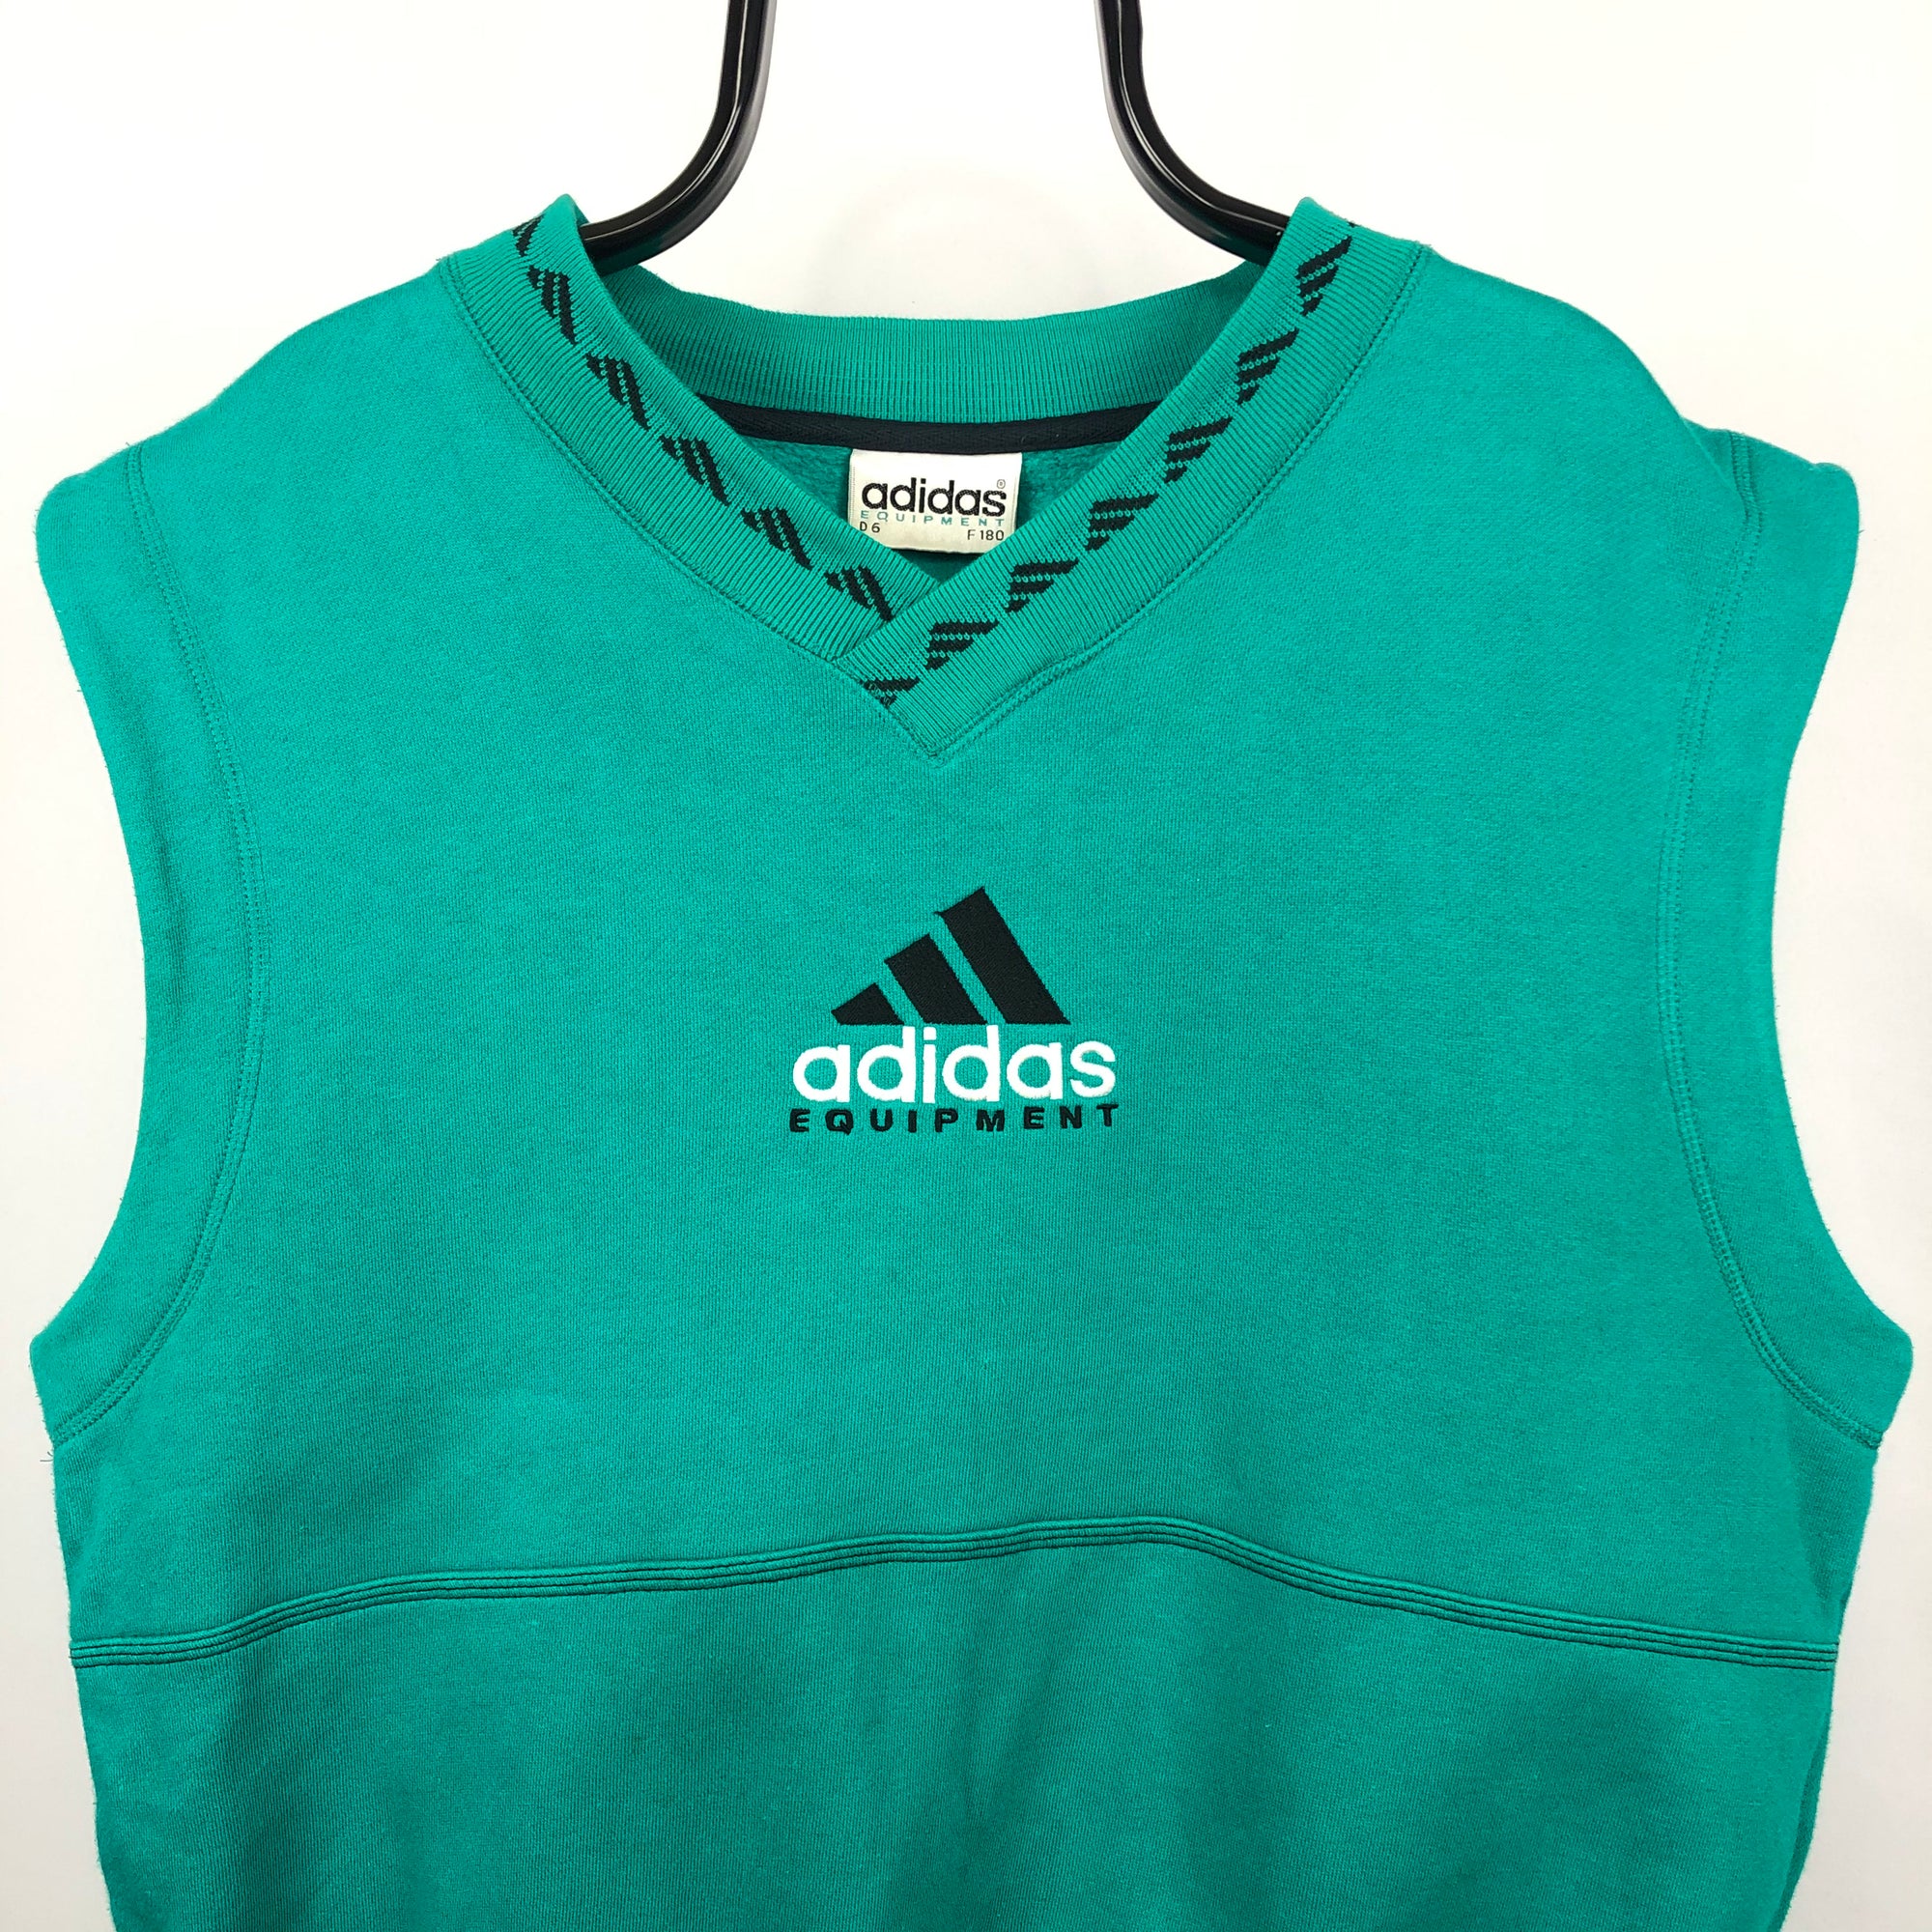 Vintage 90s Adidas Equipment Sweater Vest in Green - Men's Large/Women's XL